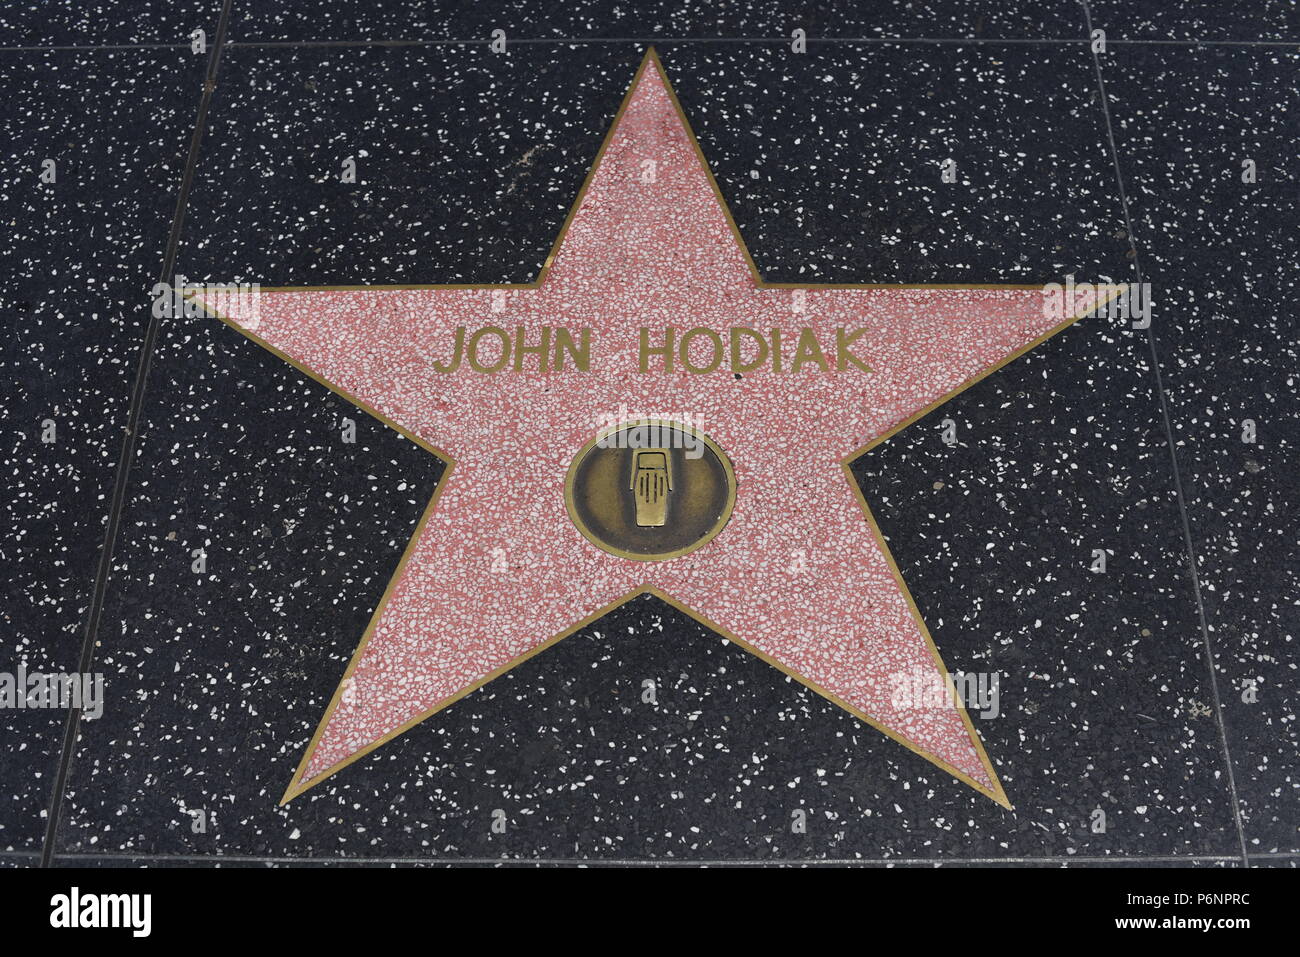 HOLLYWOOD, CA - June 29: John Hodiak star on the Hollywood Walk of Fame in Hollywood, California on June 29, 2018. Stock Photo